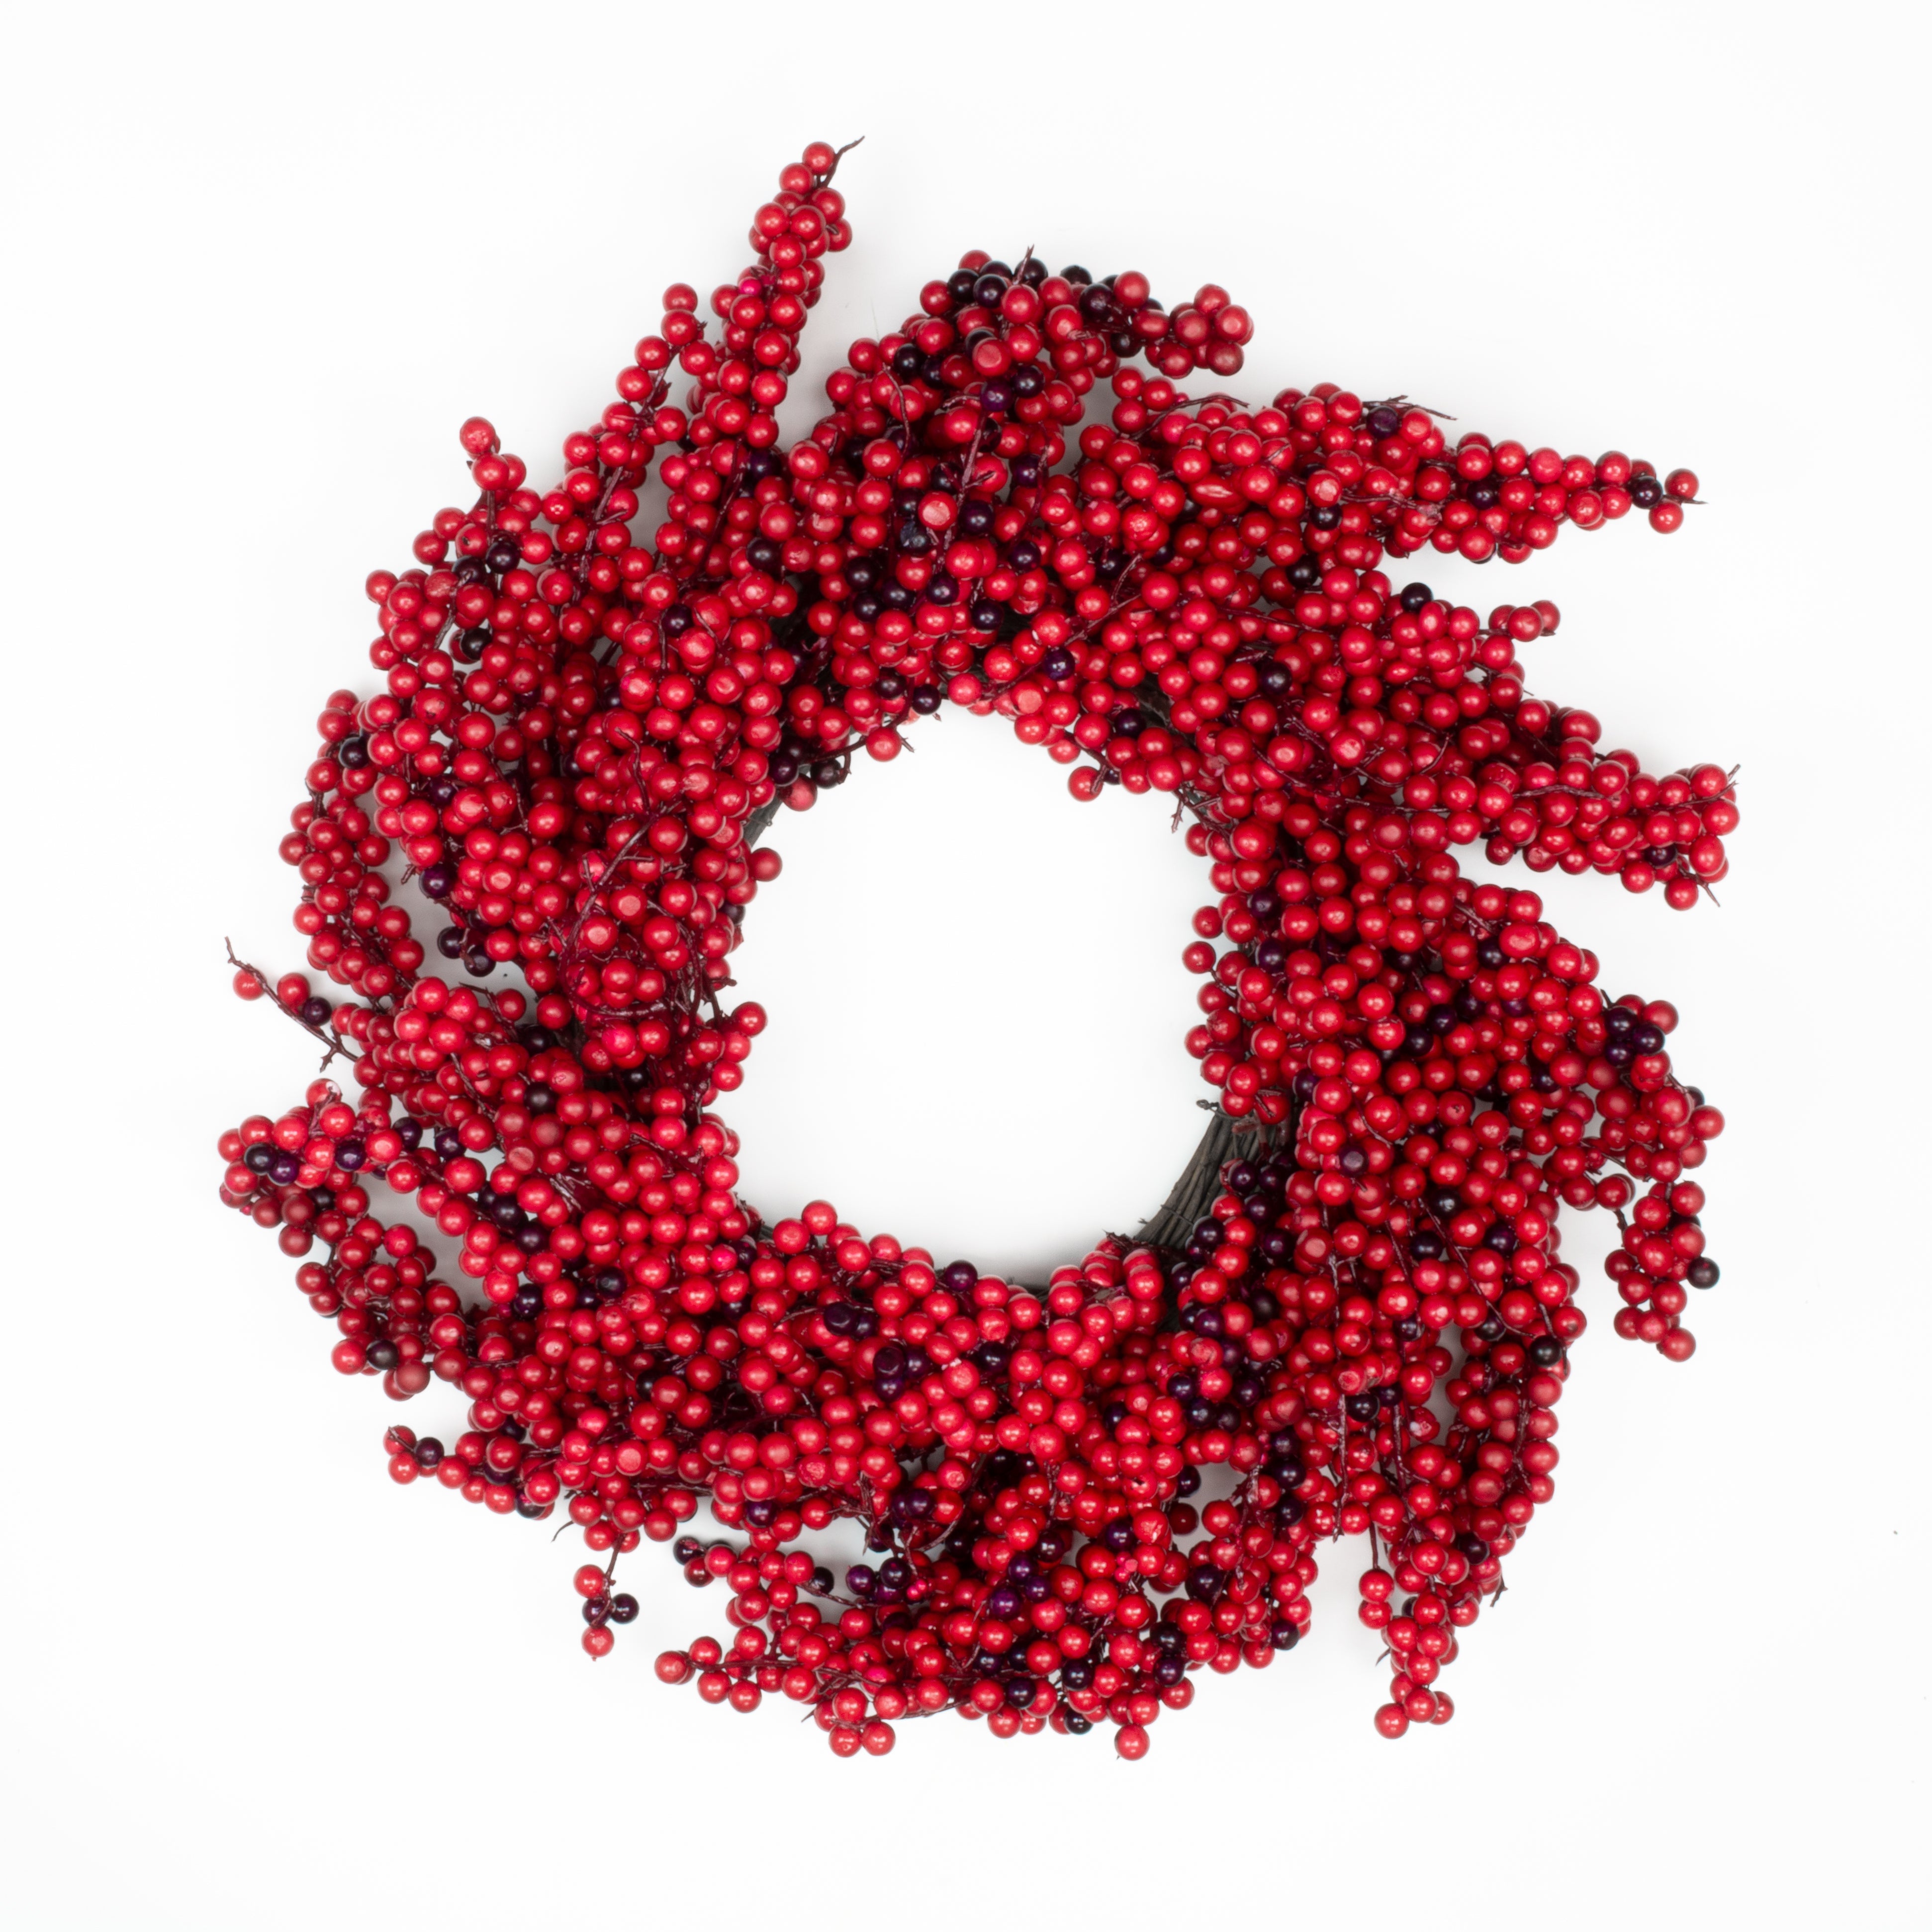 Red Spiral Berry Wreath